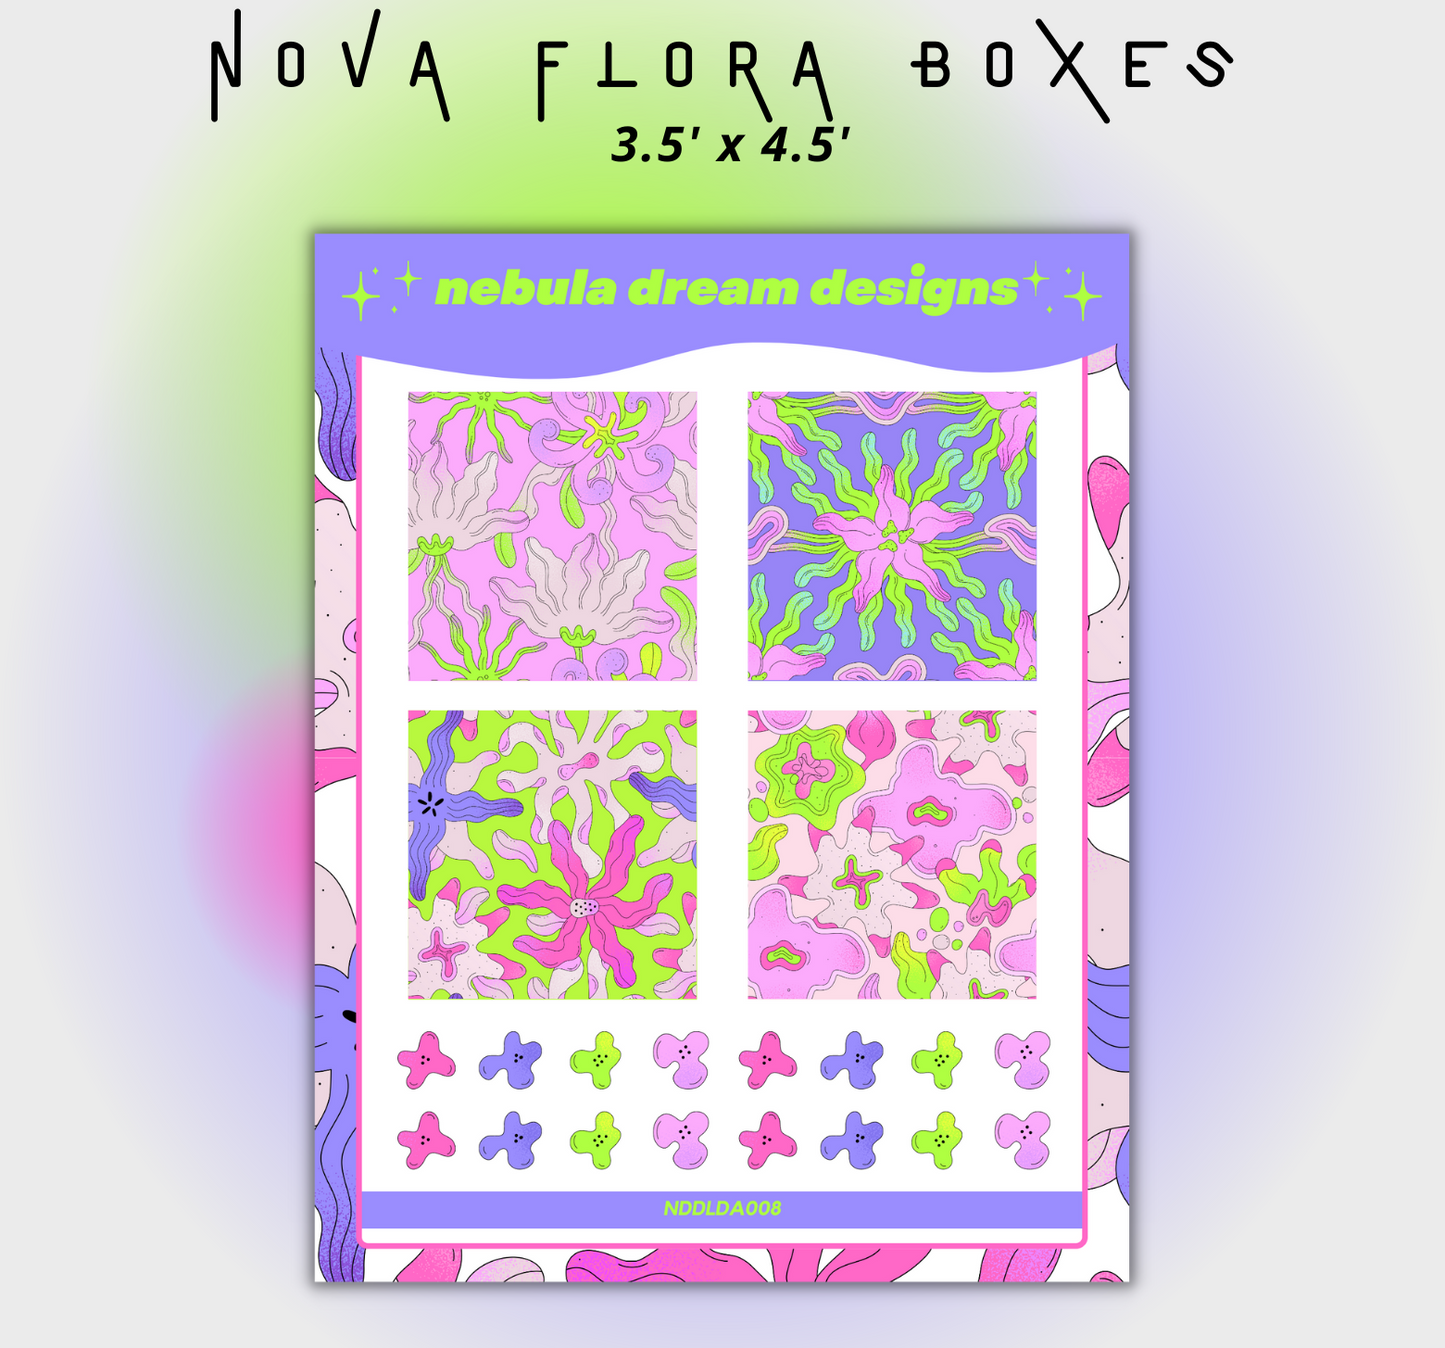 ✦NEW✦ Deco Collection - "Nova Flora"